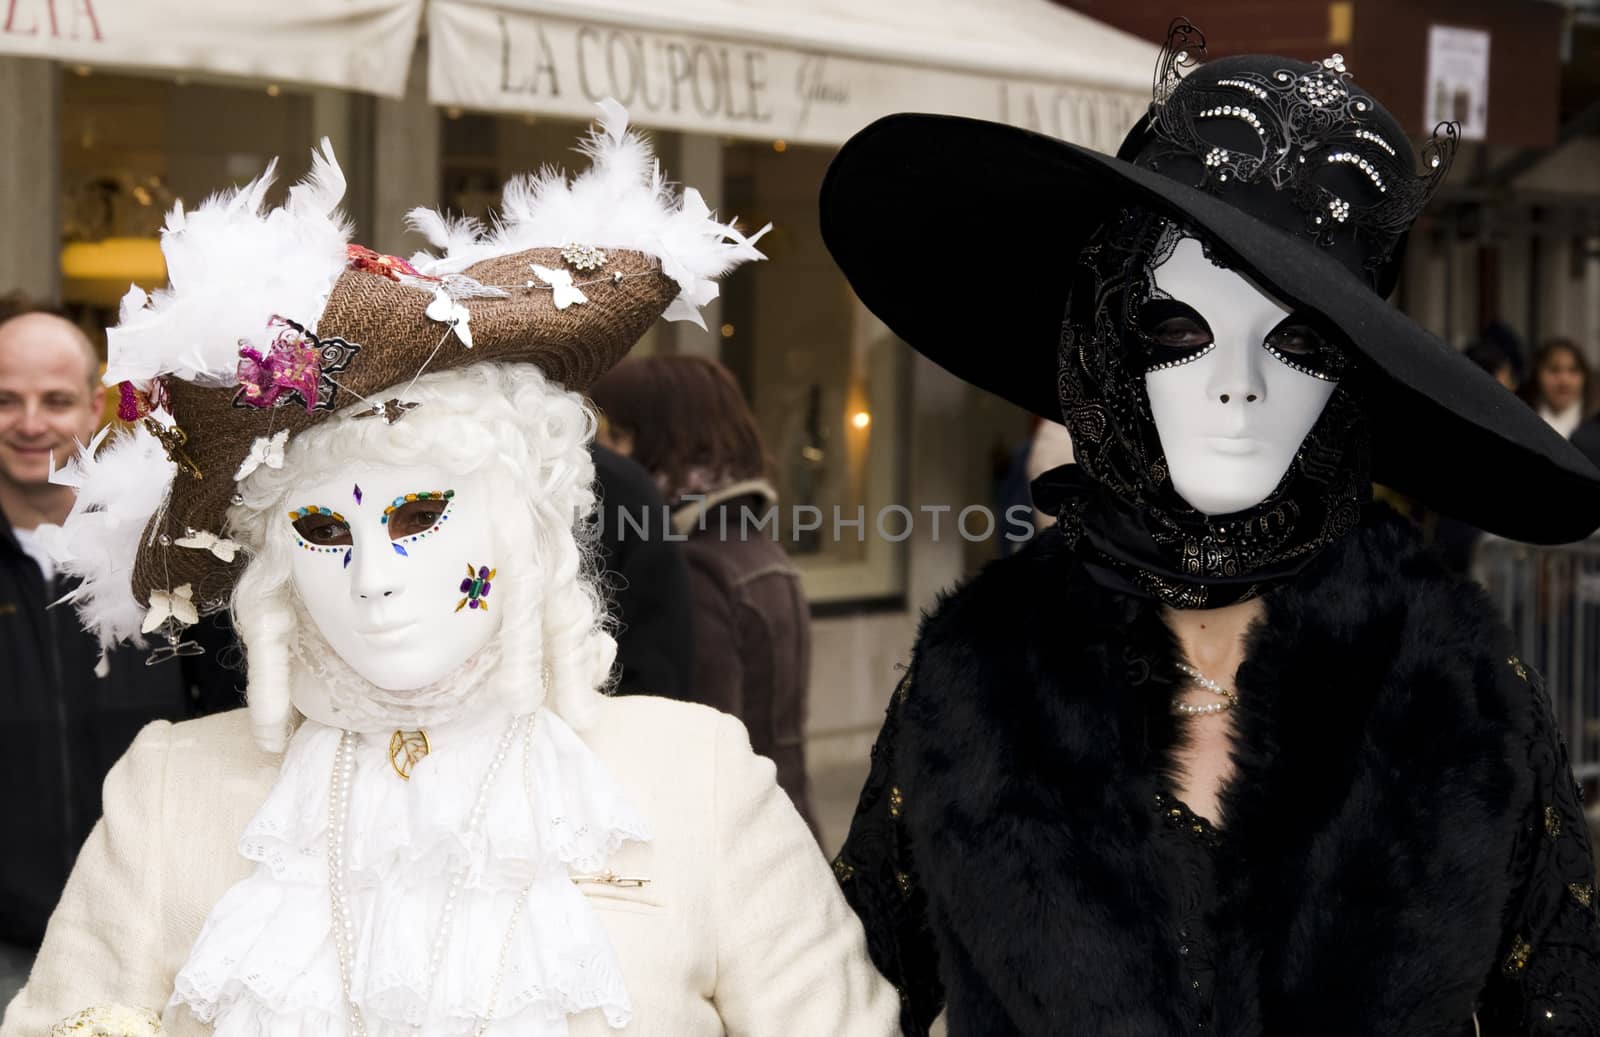 The Carnival of Venice  by jelen80